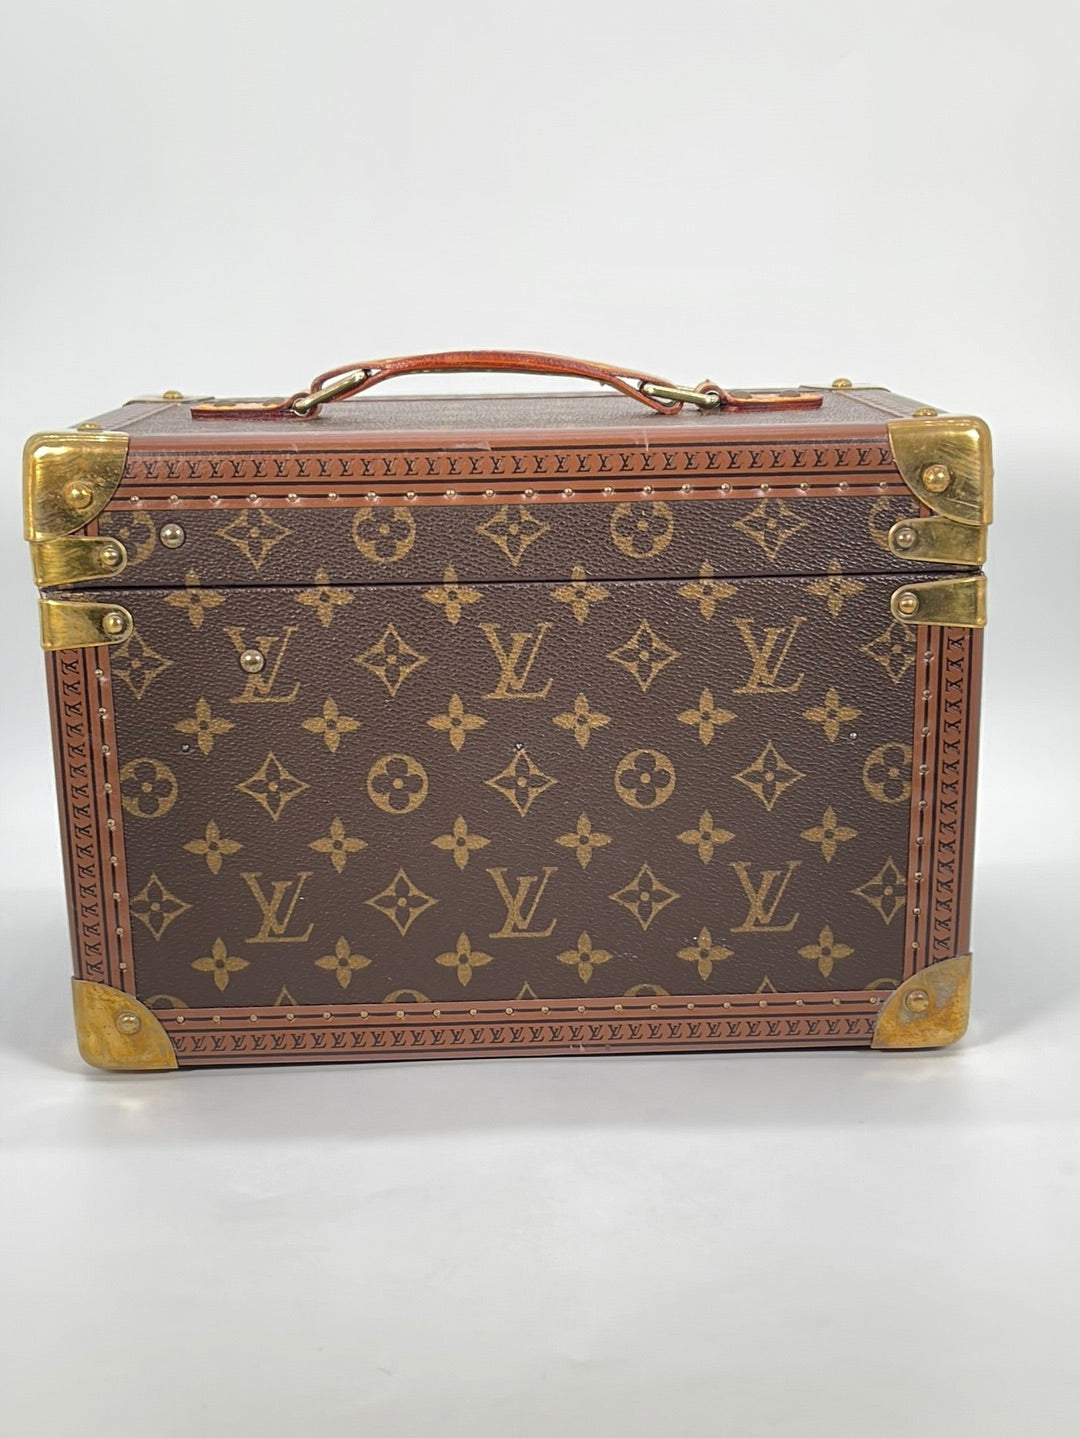 Lot - Louis Vuitton Hard Cased Monogram Square Train Case, 786863 18 x 18 x  9 1/2 inches